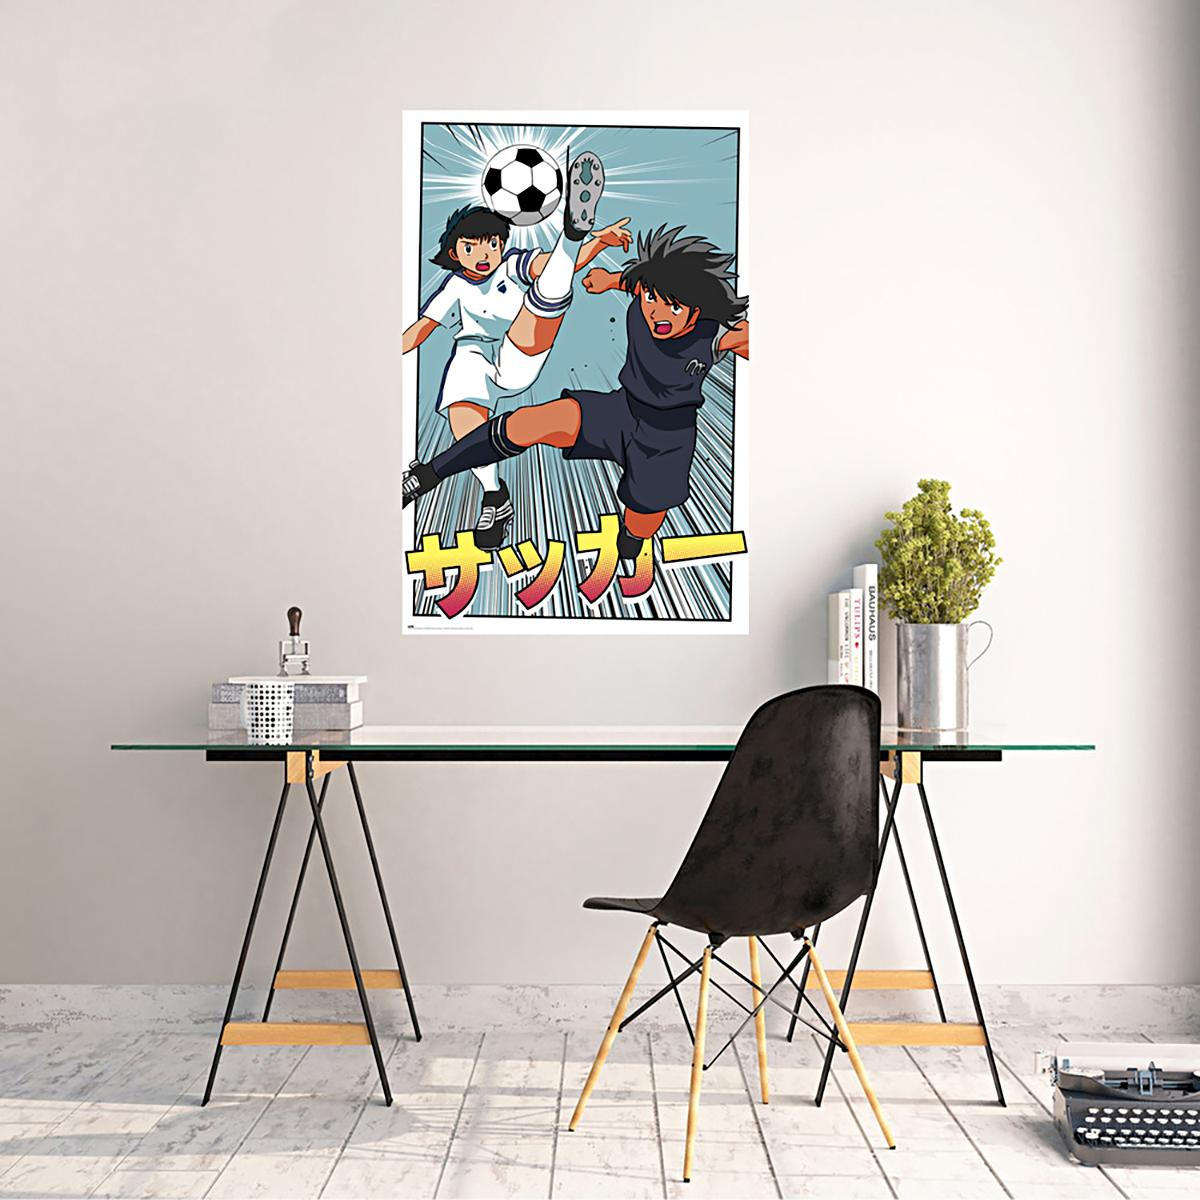 ERIK EDITORES Captain Tsubasa Genzo GRUPO Poster and Tsubasa Poster